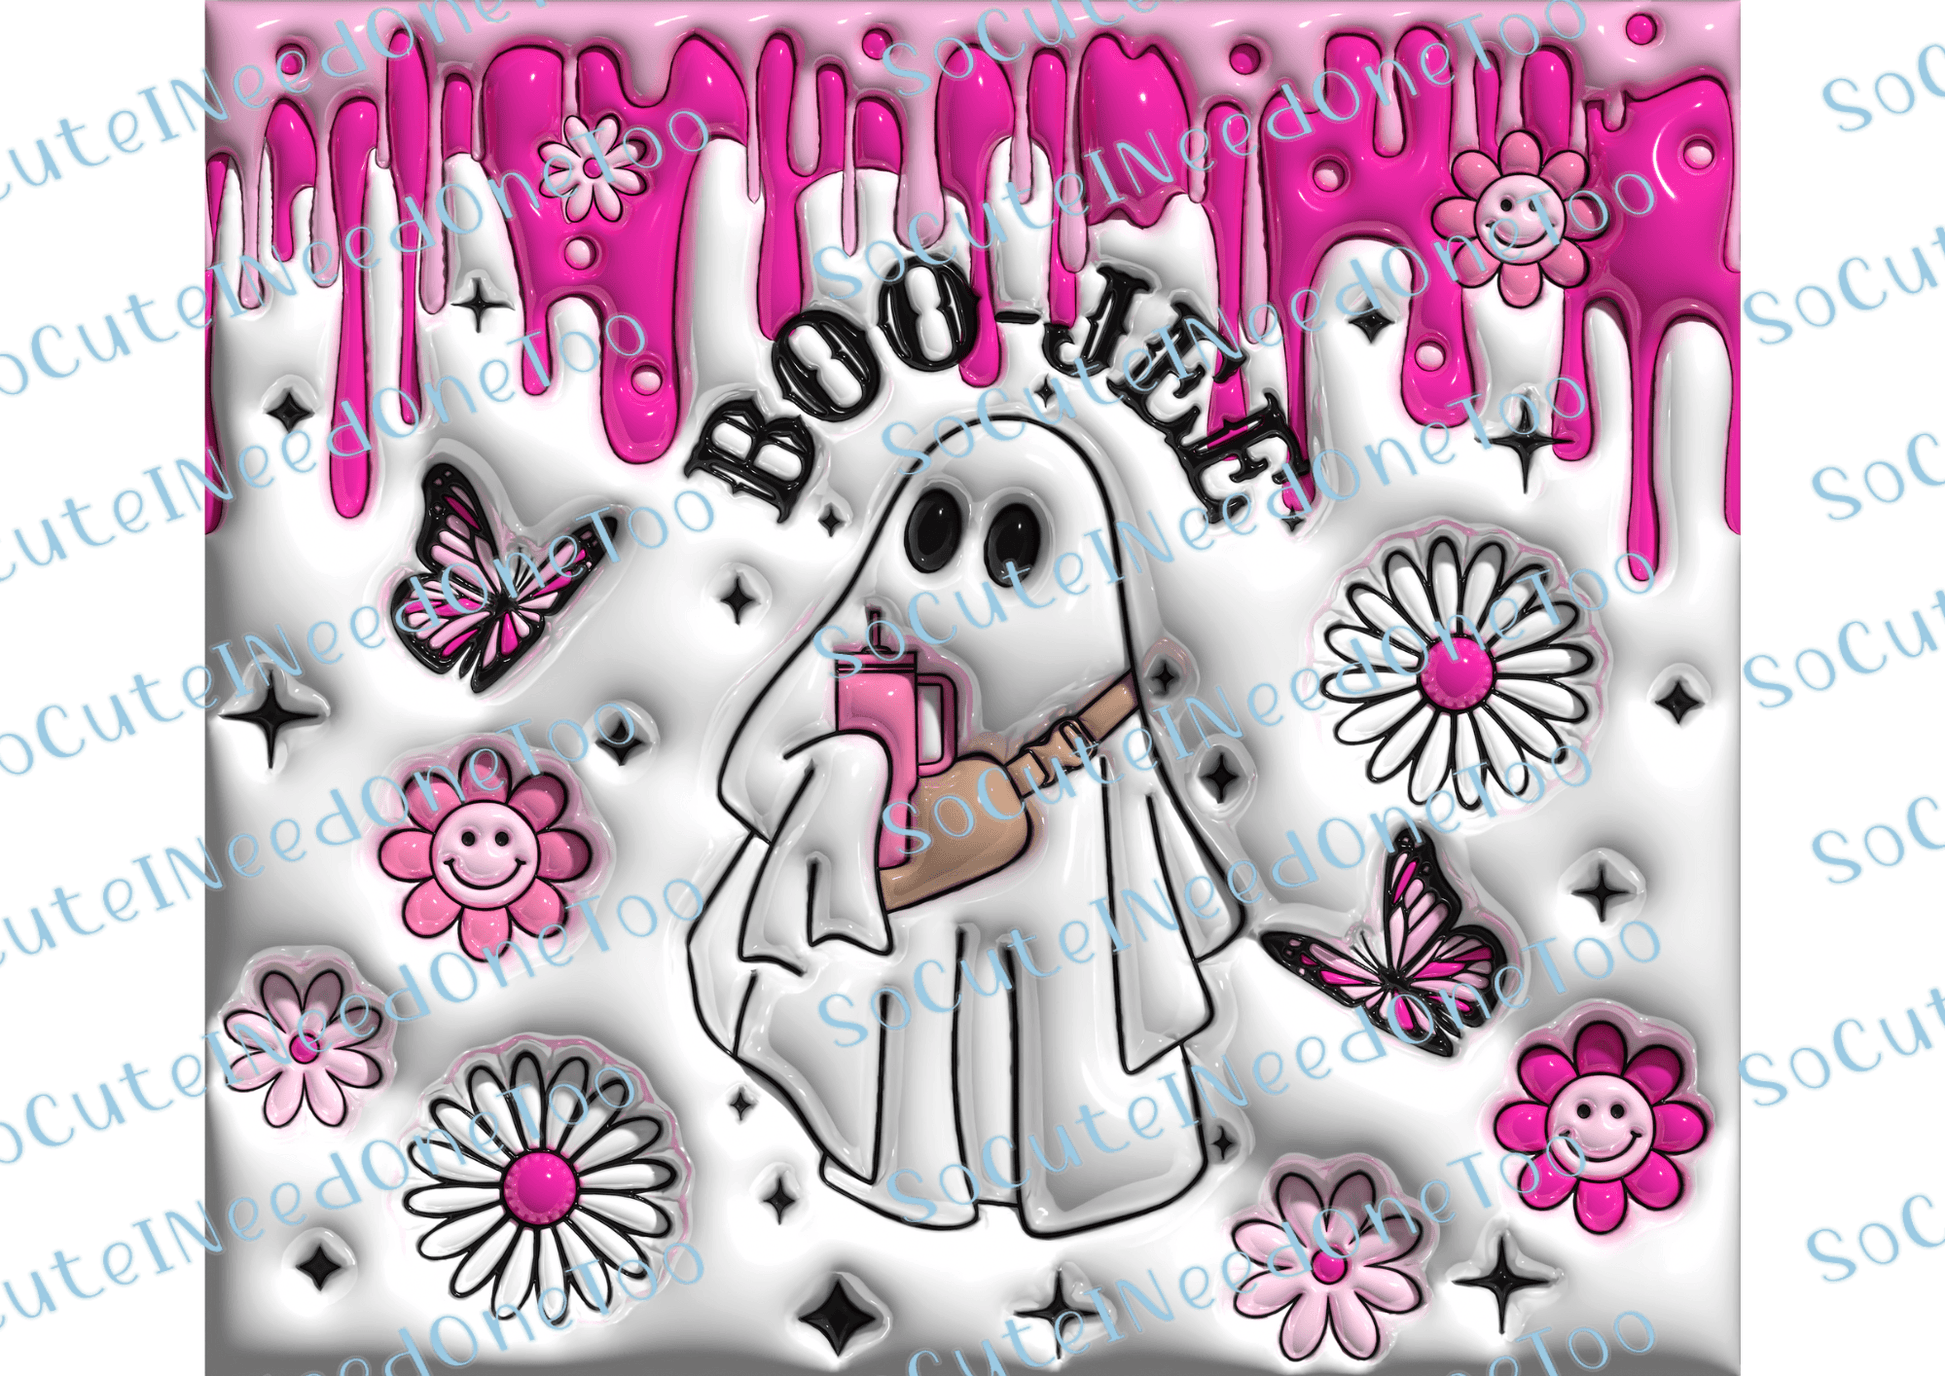 Halloween Horror Album of Wraps #1 - SoCuteINeedOneToo